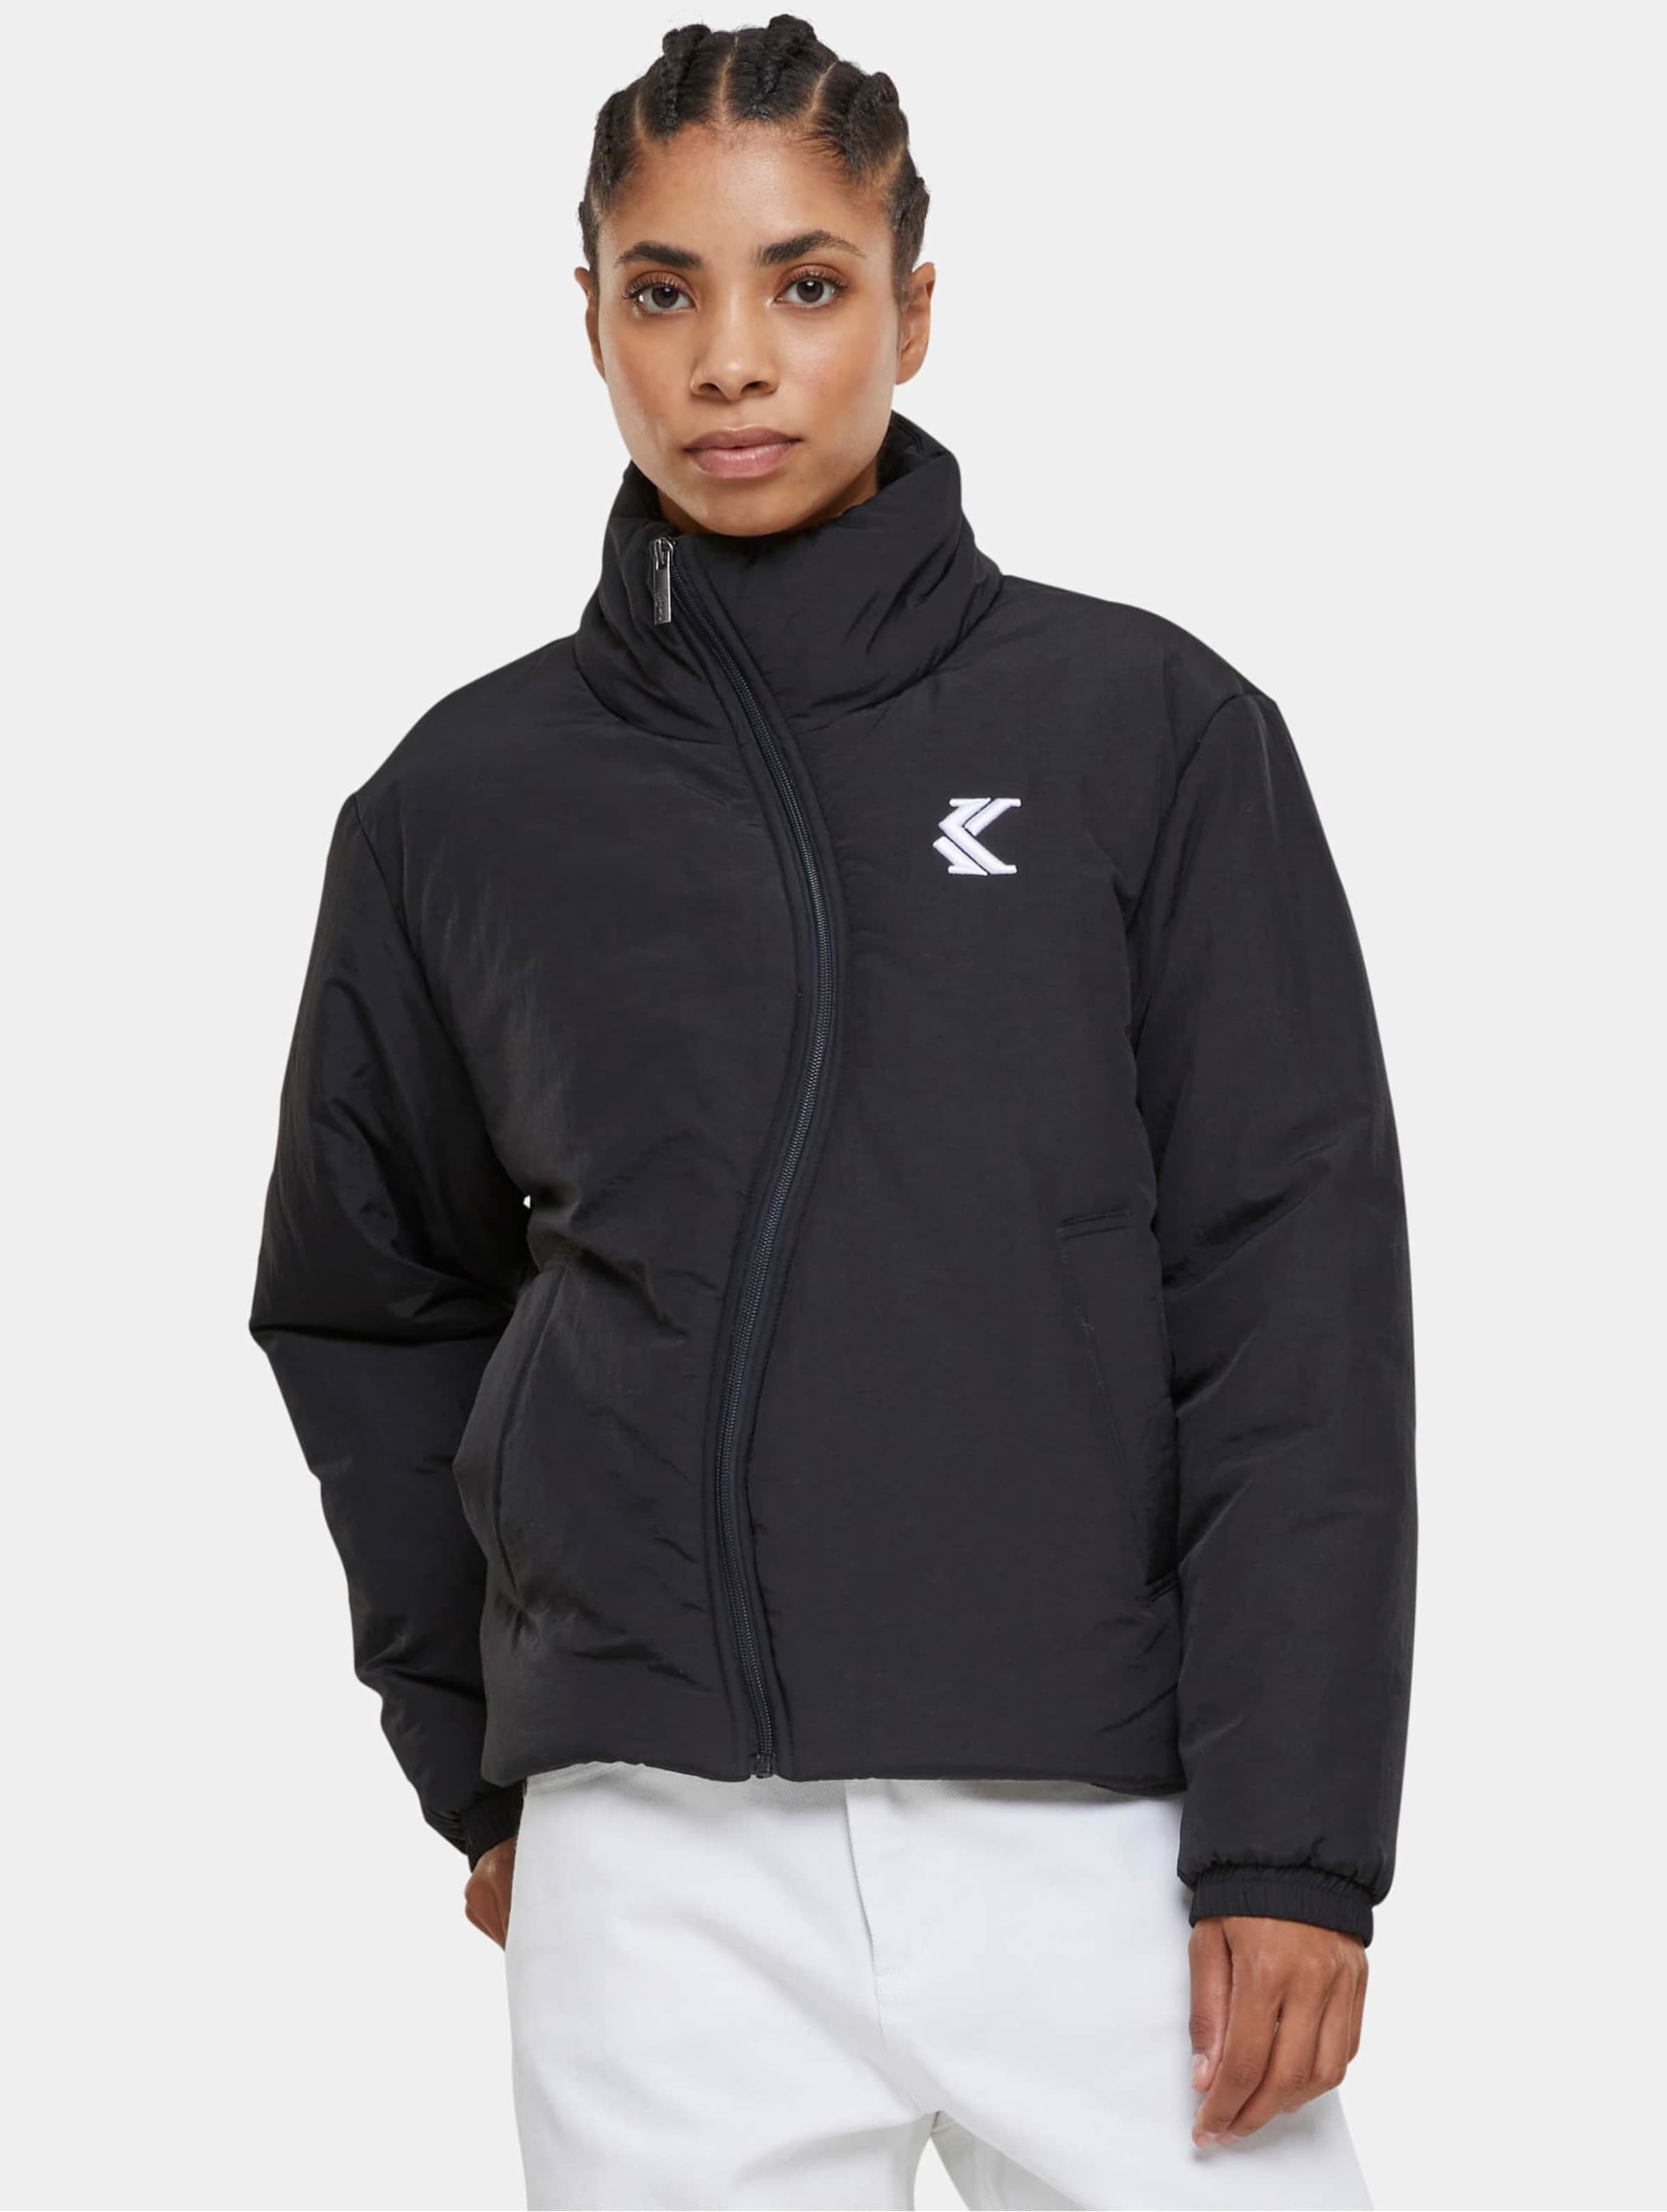 Karl Kani KW233-051-3 KK OG Wavy Puffer Jacket Vrouwen op kleur zwart, Maat XXS